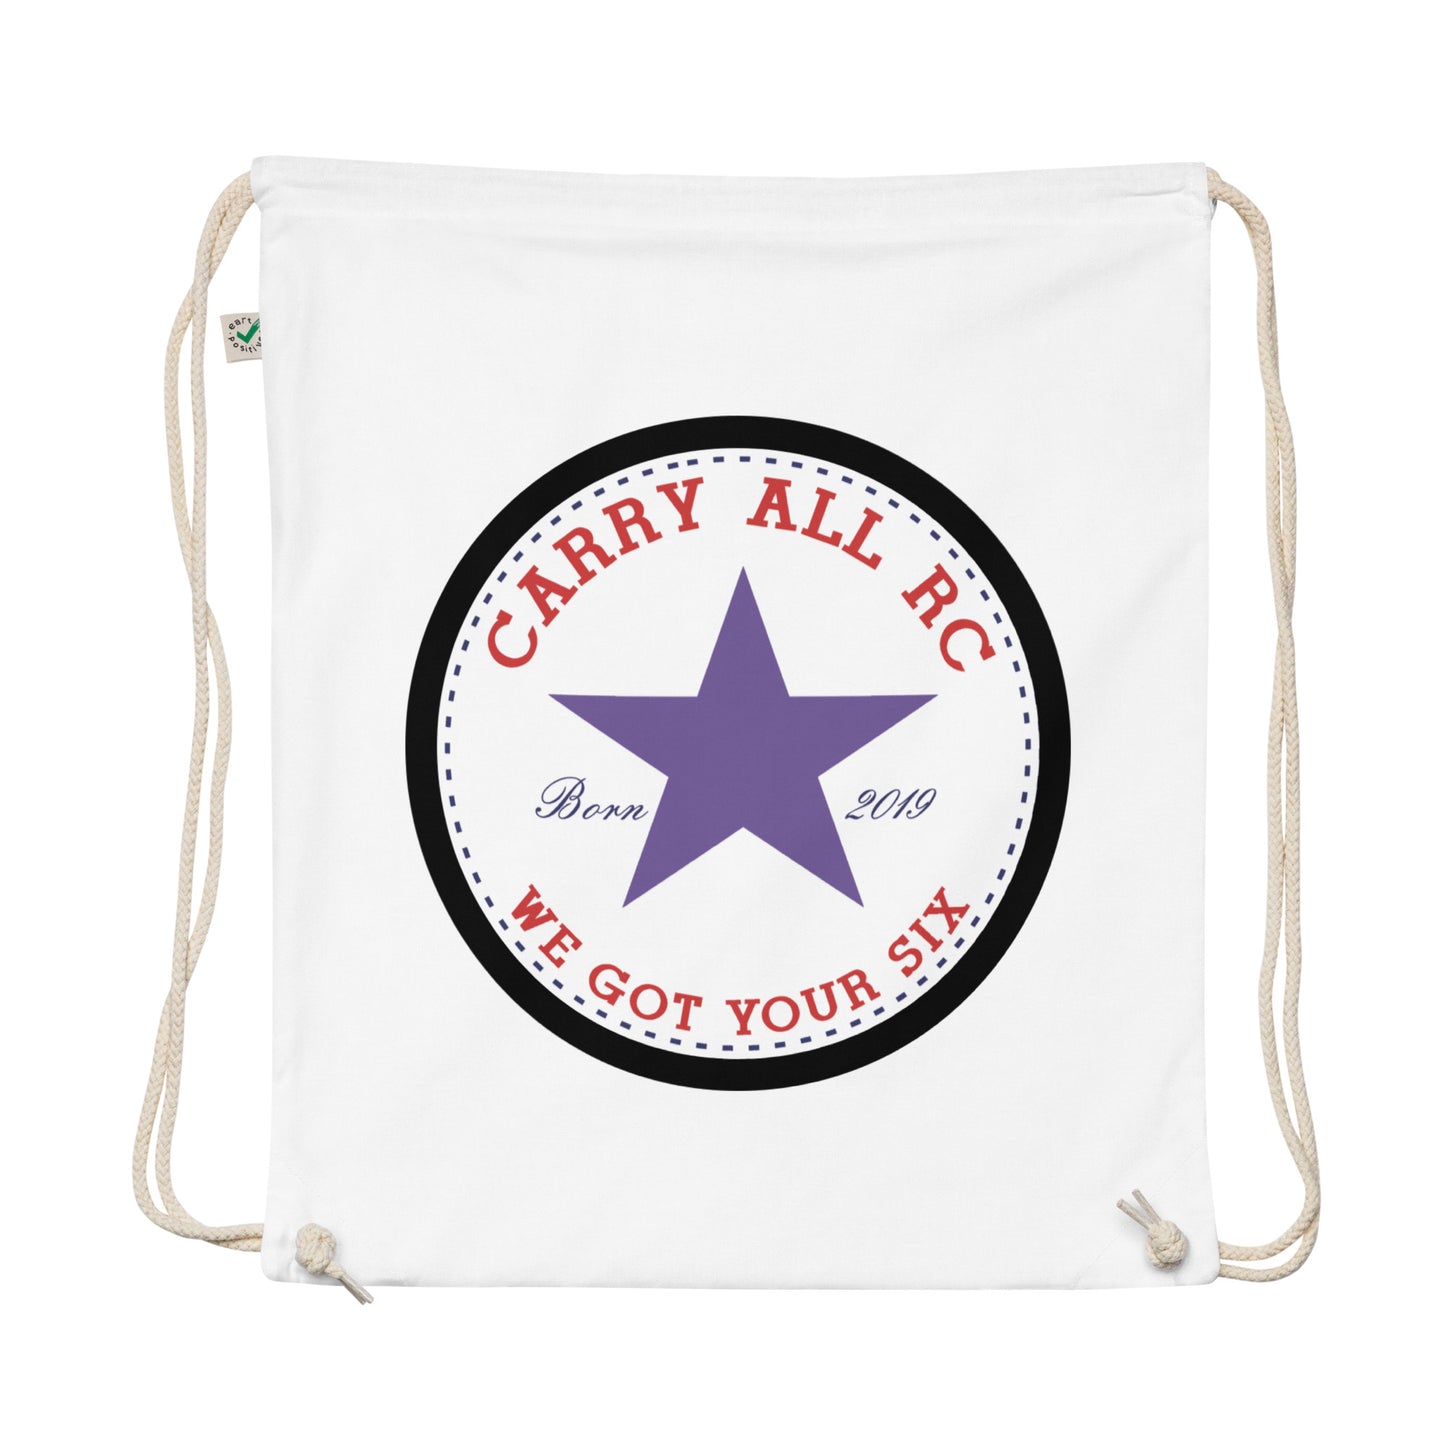 CARC All Star cotton drawstring bag